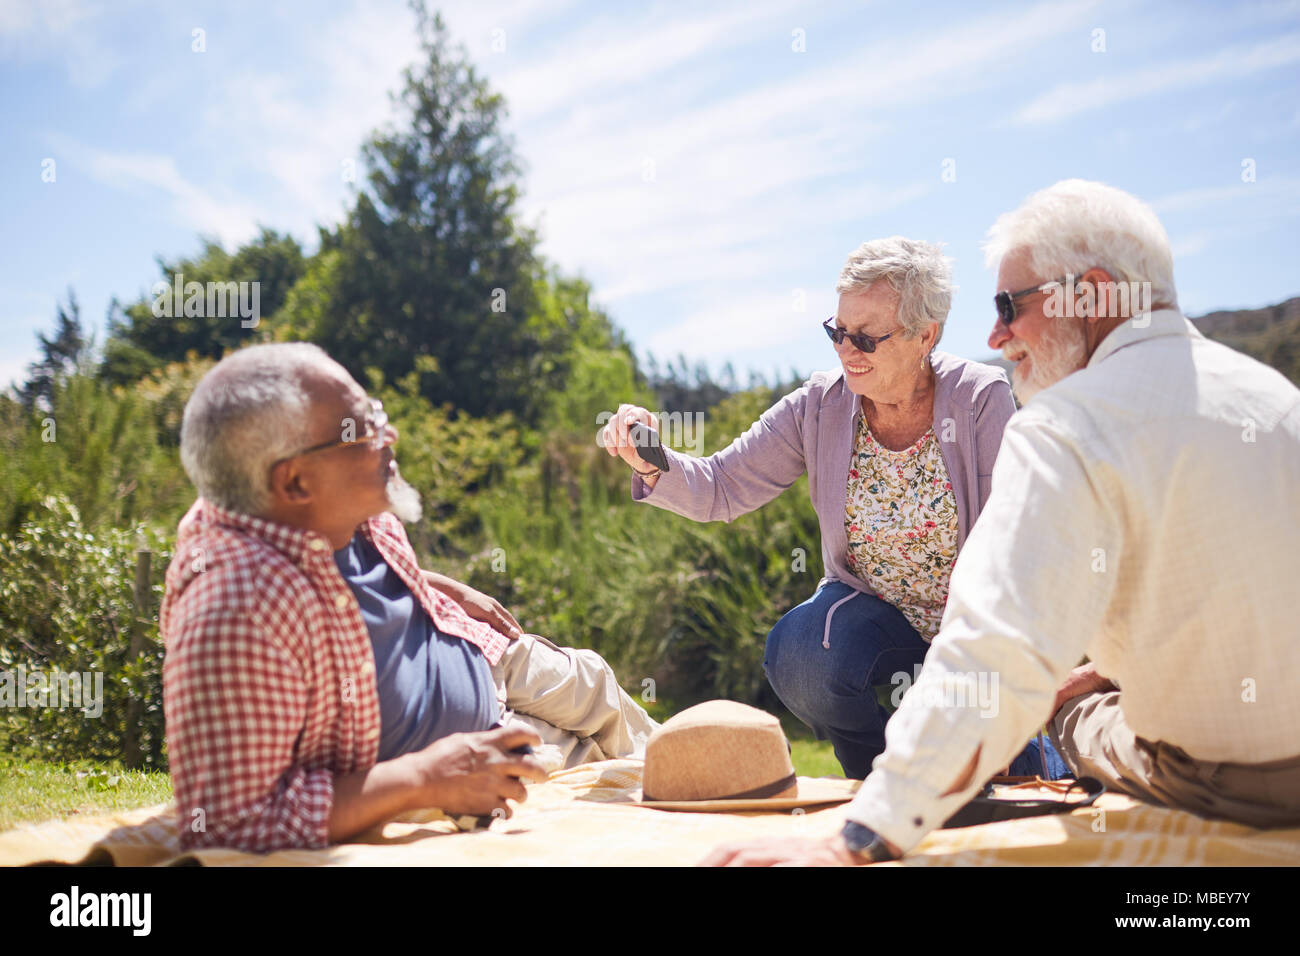 Active senior friends using camera phone, enjoying summer picnic Stock Photo